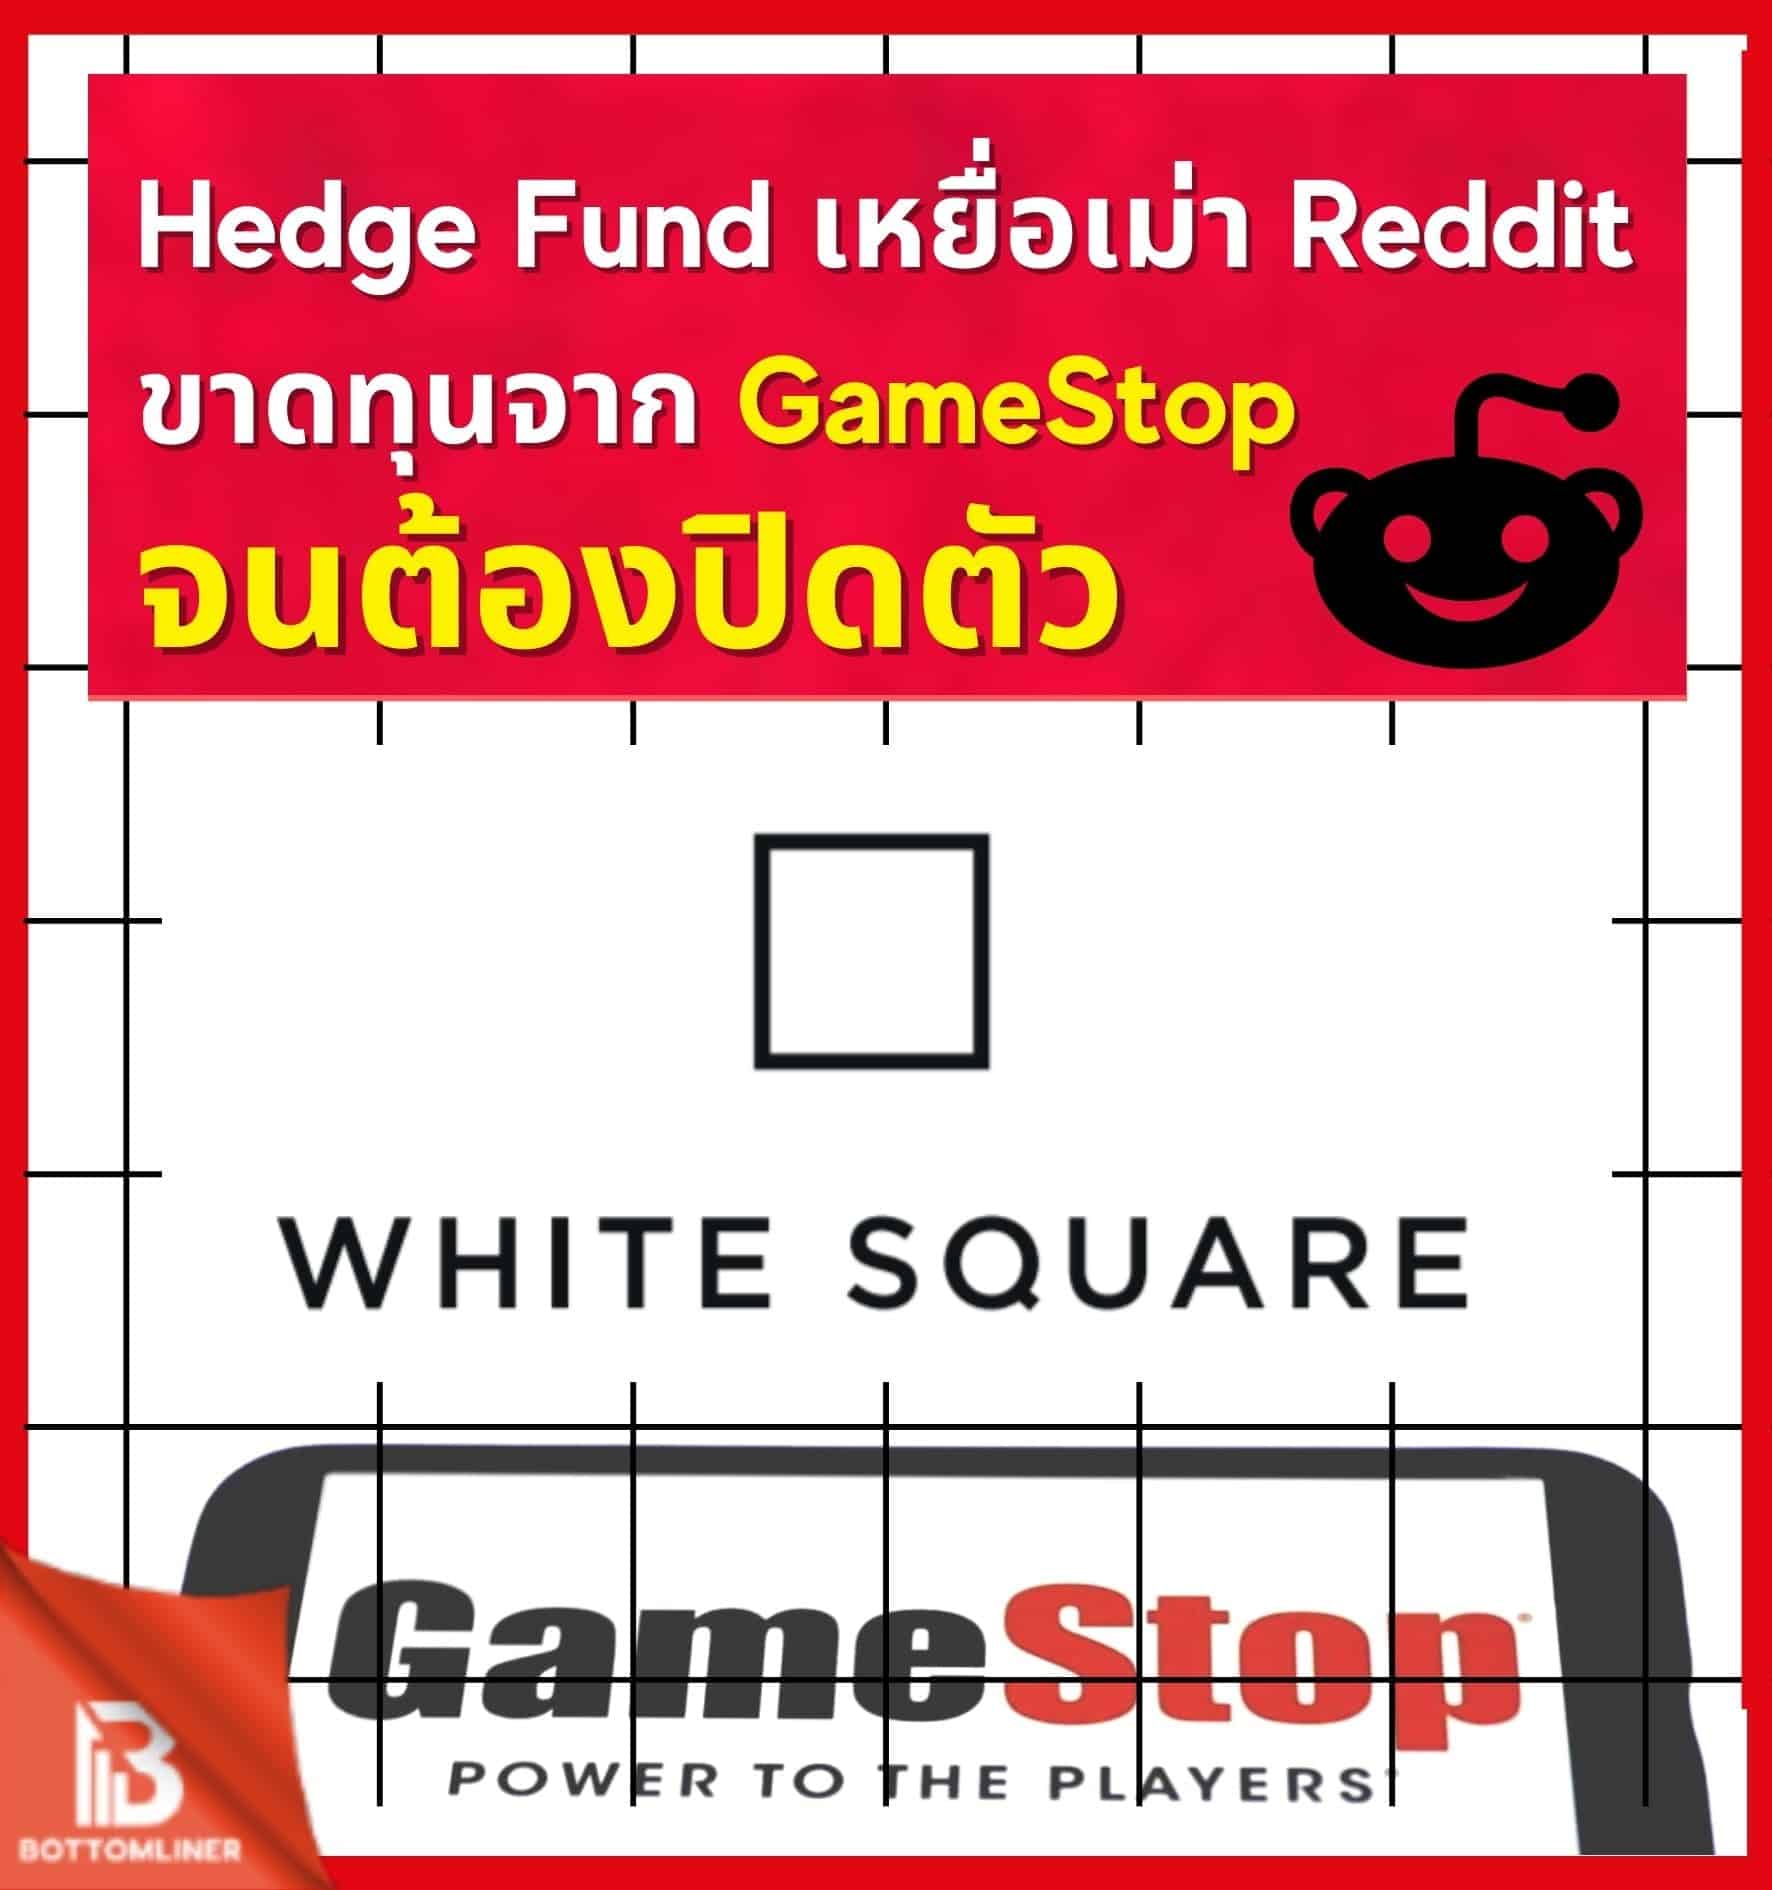 Hedge Fund เหยื่อเม่า Reddit ขาดทุนจาก GameStop จนต้องปิดตัว